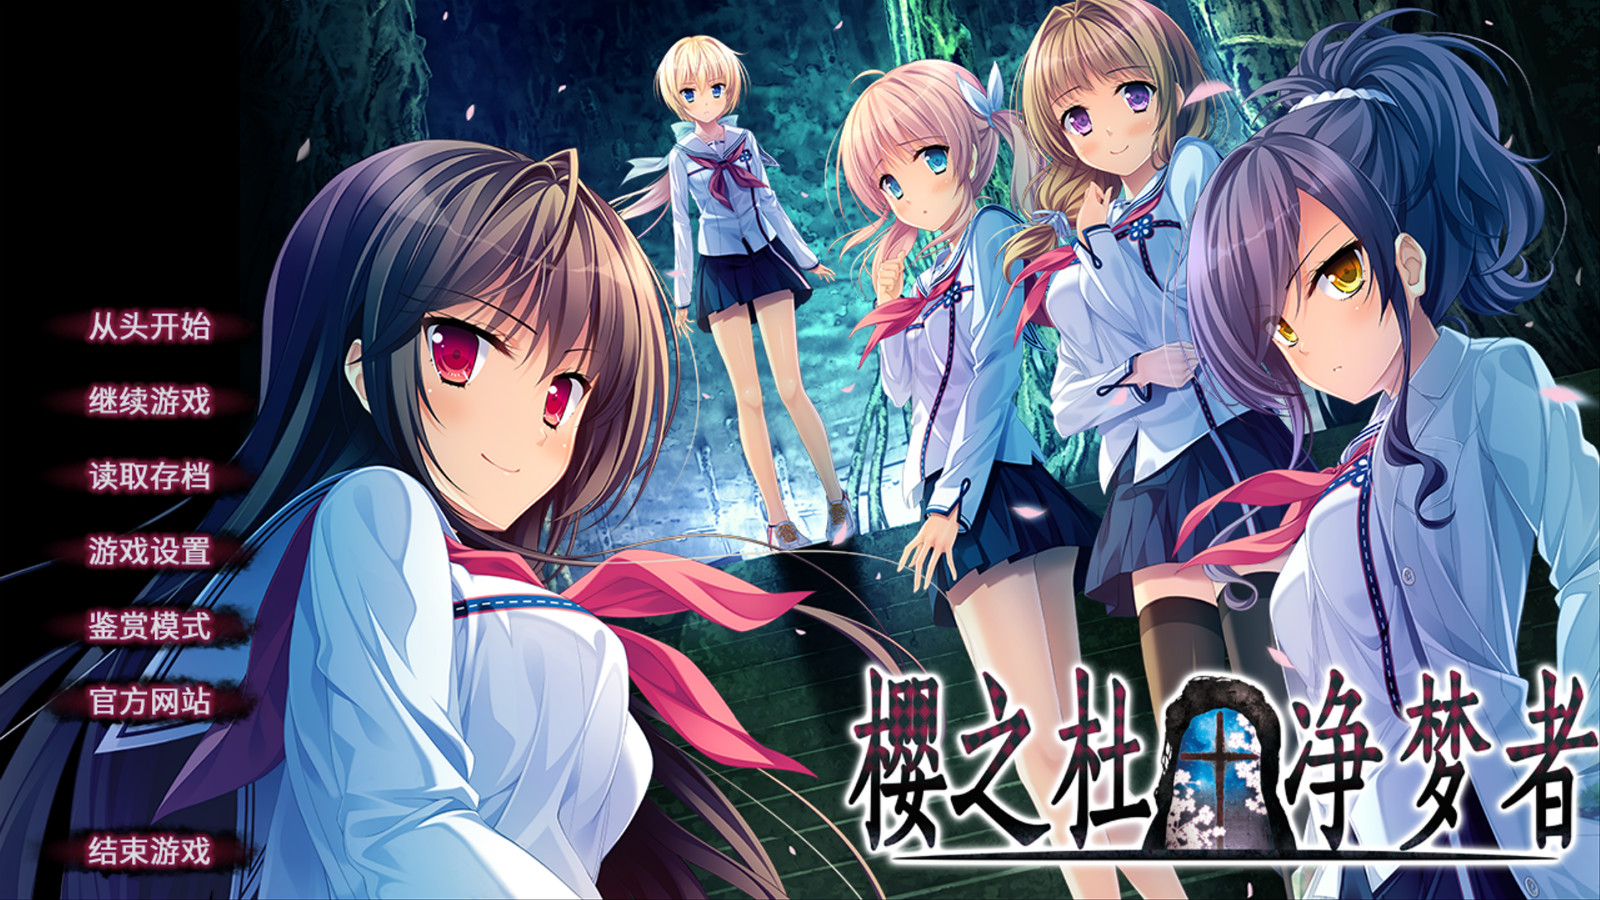 Sakura No Mori Dreamers On Steam